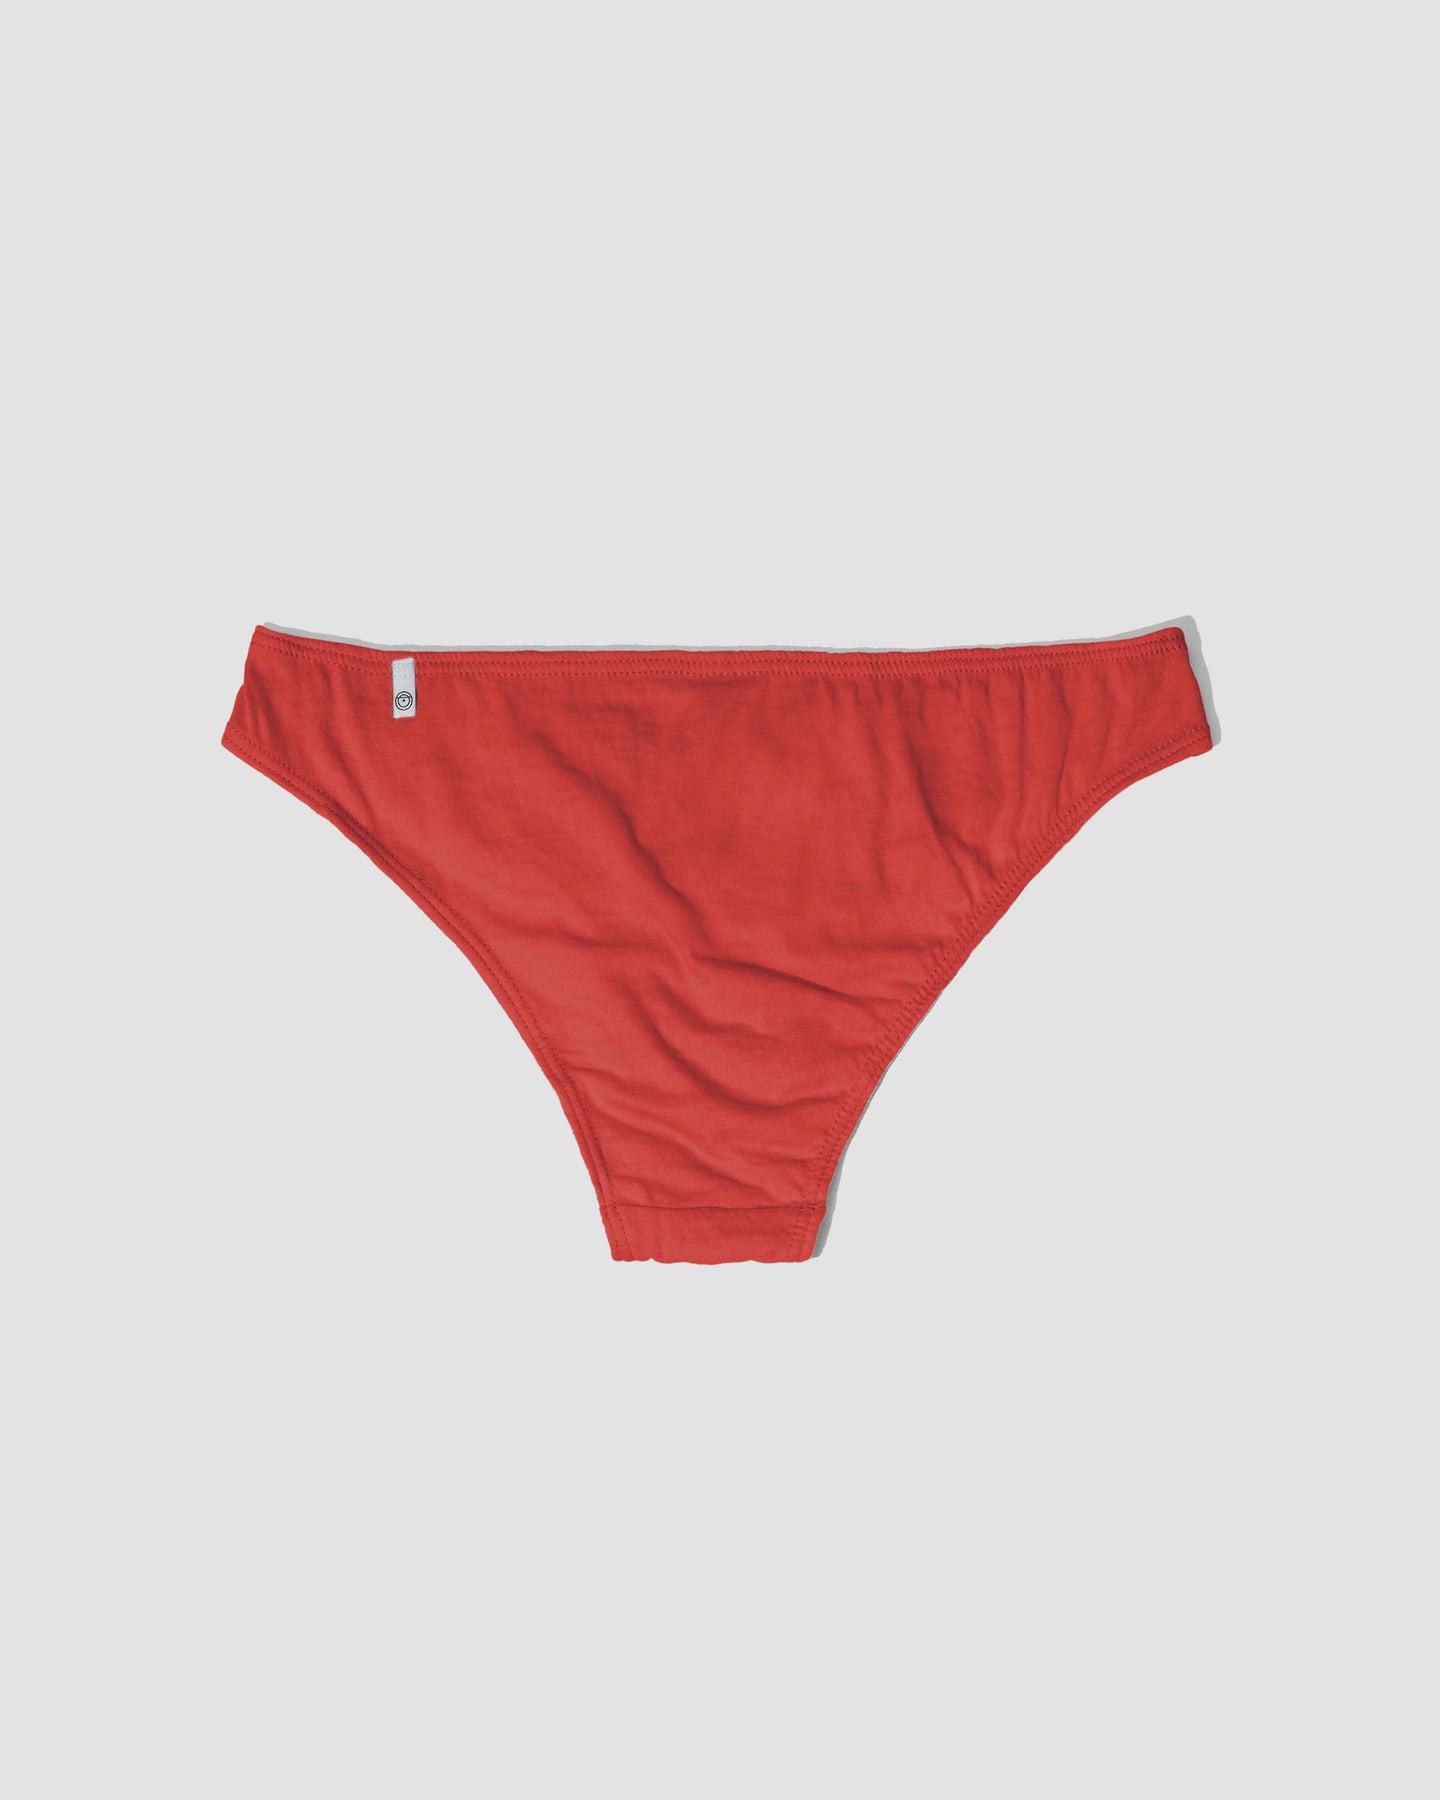 tanga − 100% organic cotton underwear, oddobody